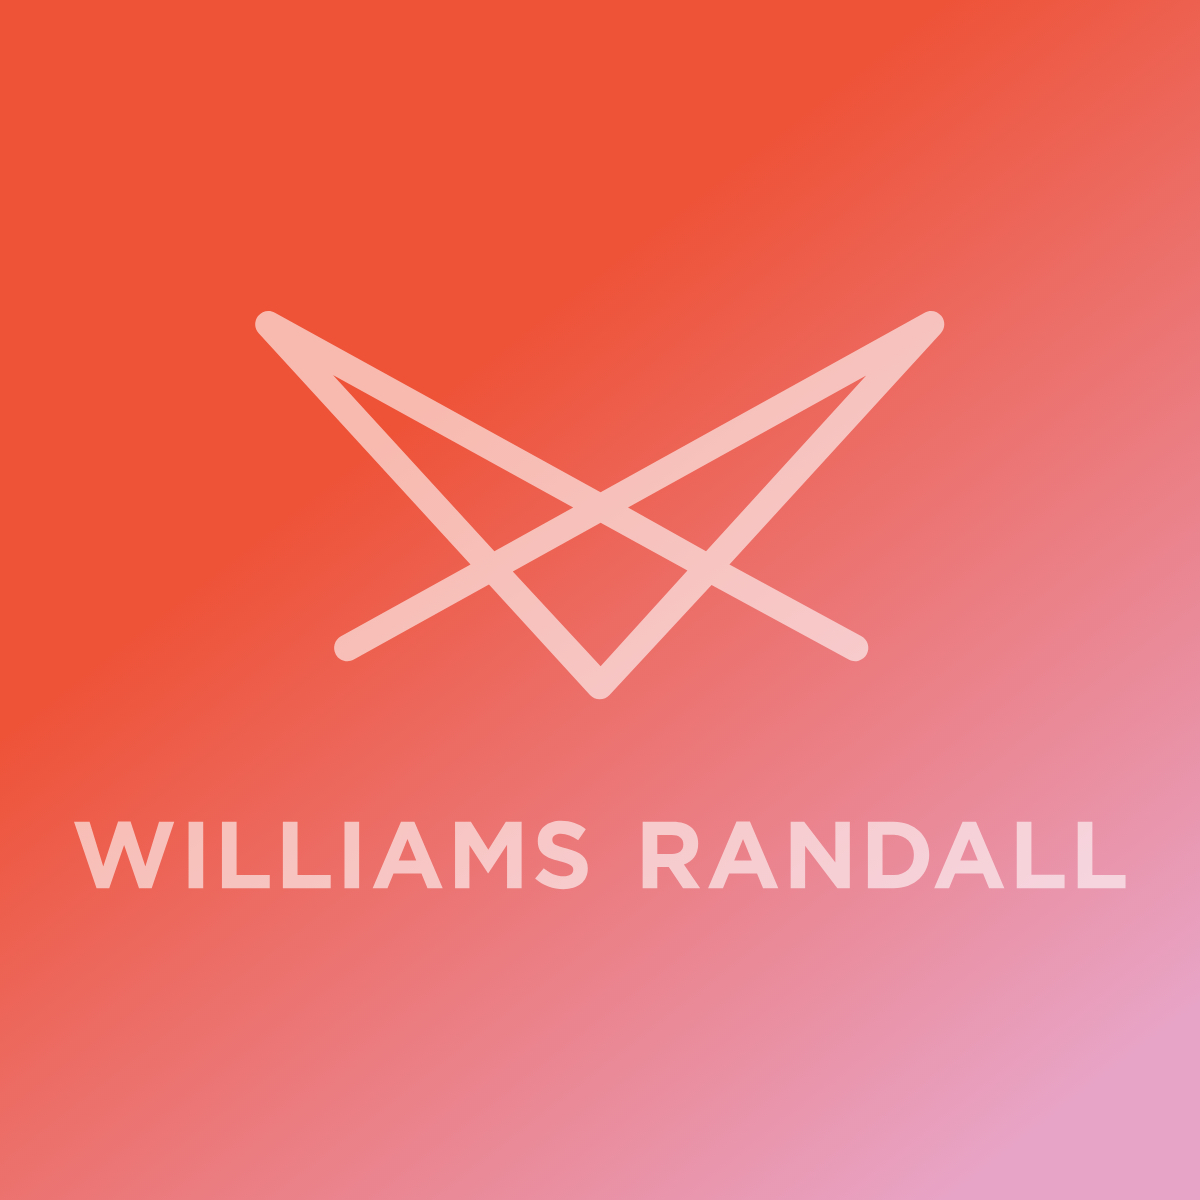 Williams Randall